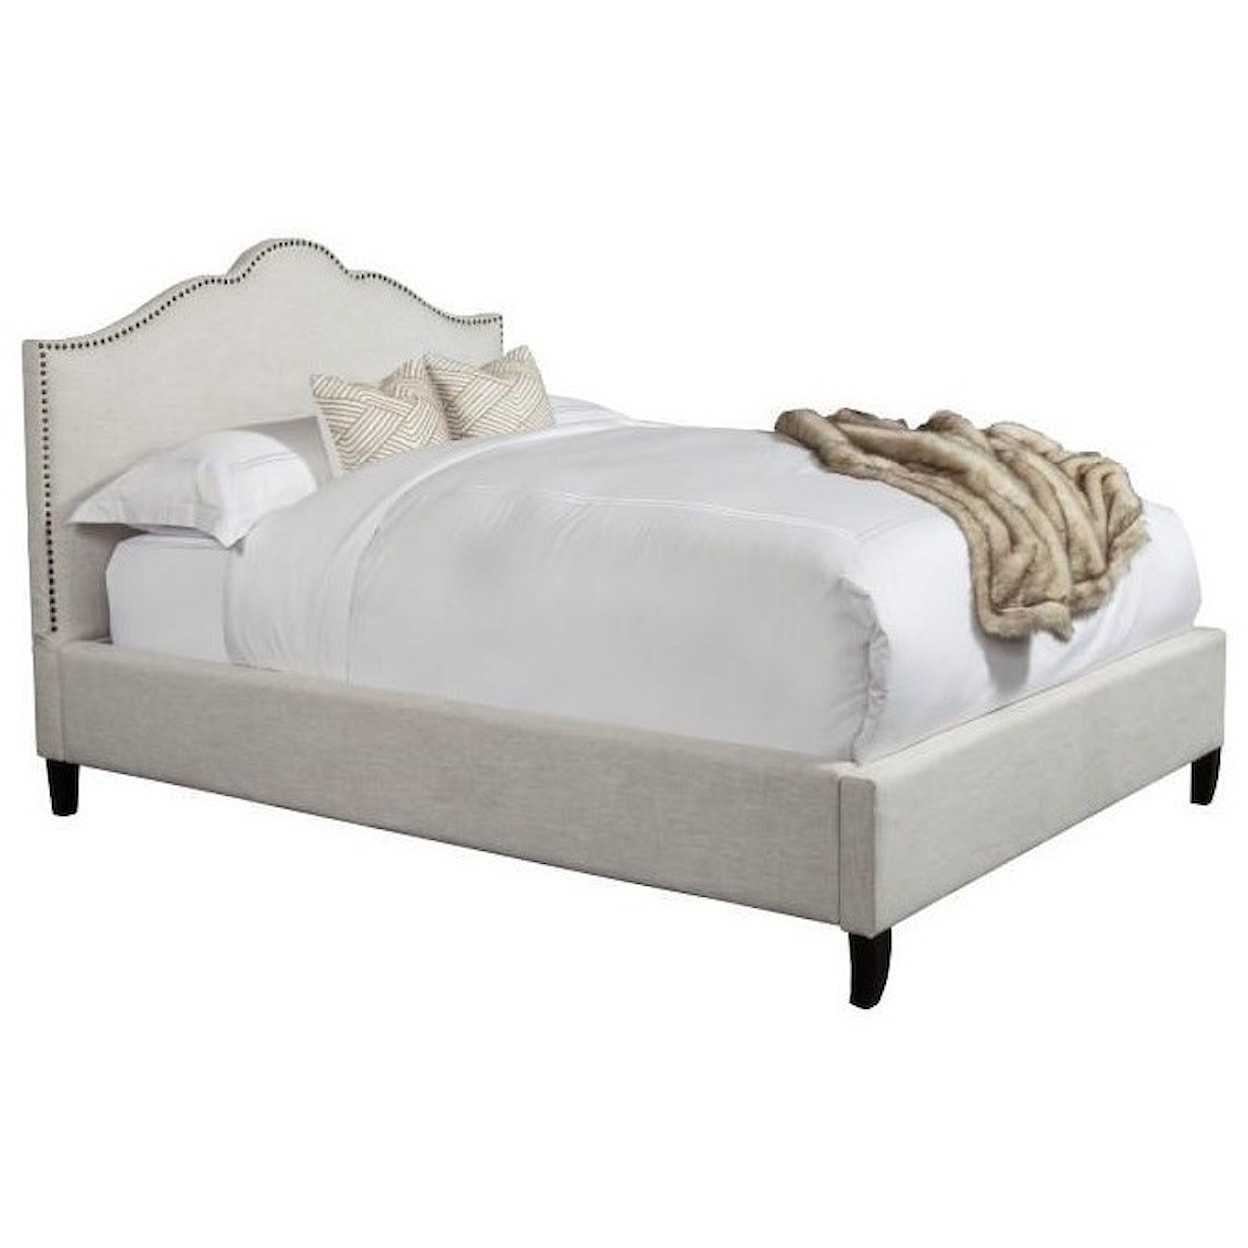 Paramount Living Jamie Queen Upholstered Bed